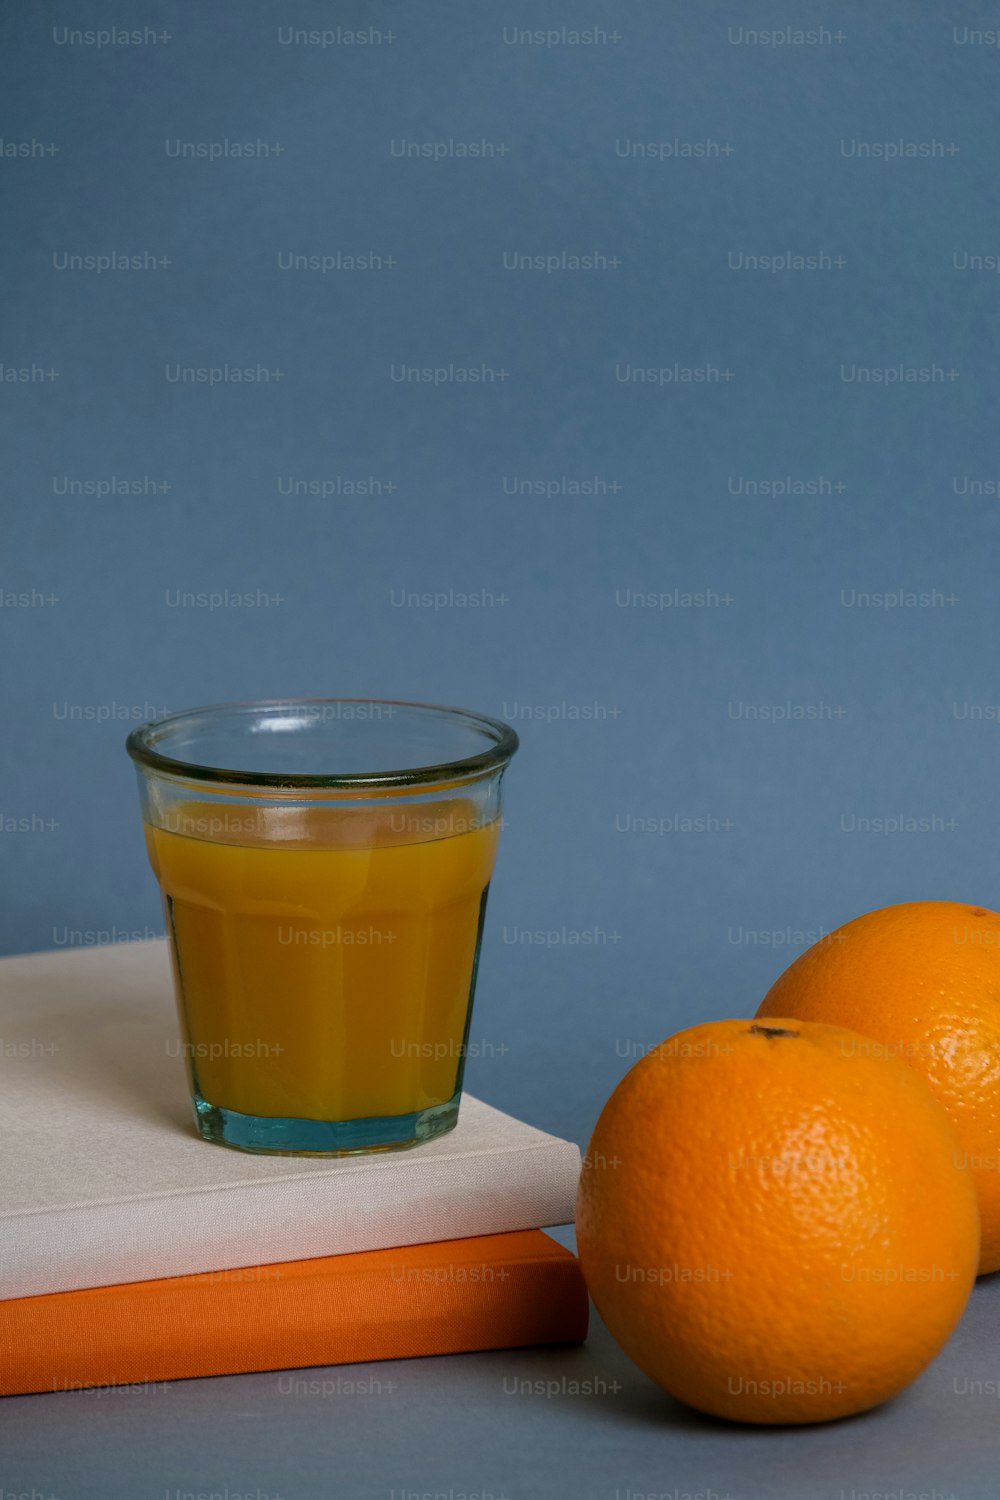 a glass of orange juice next to three oranges